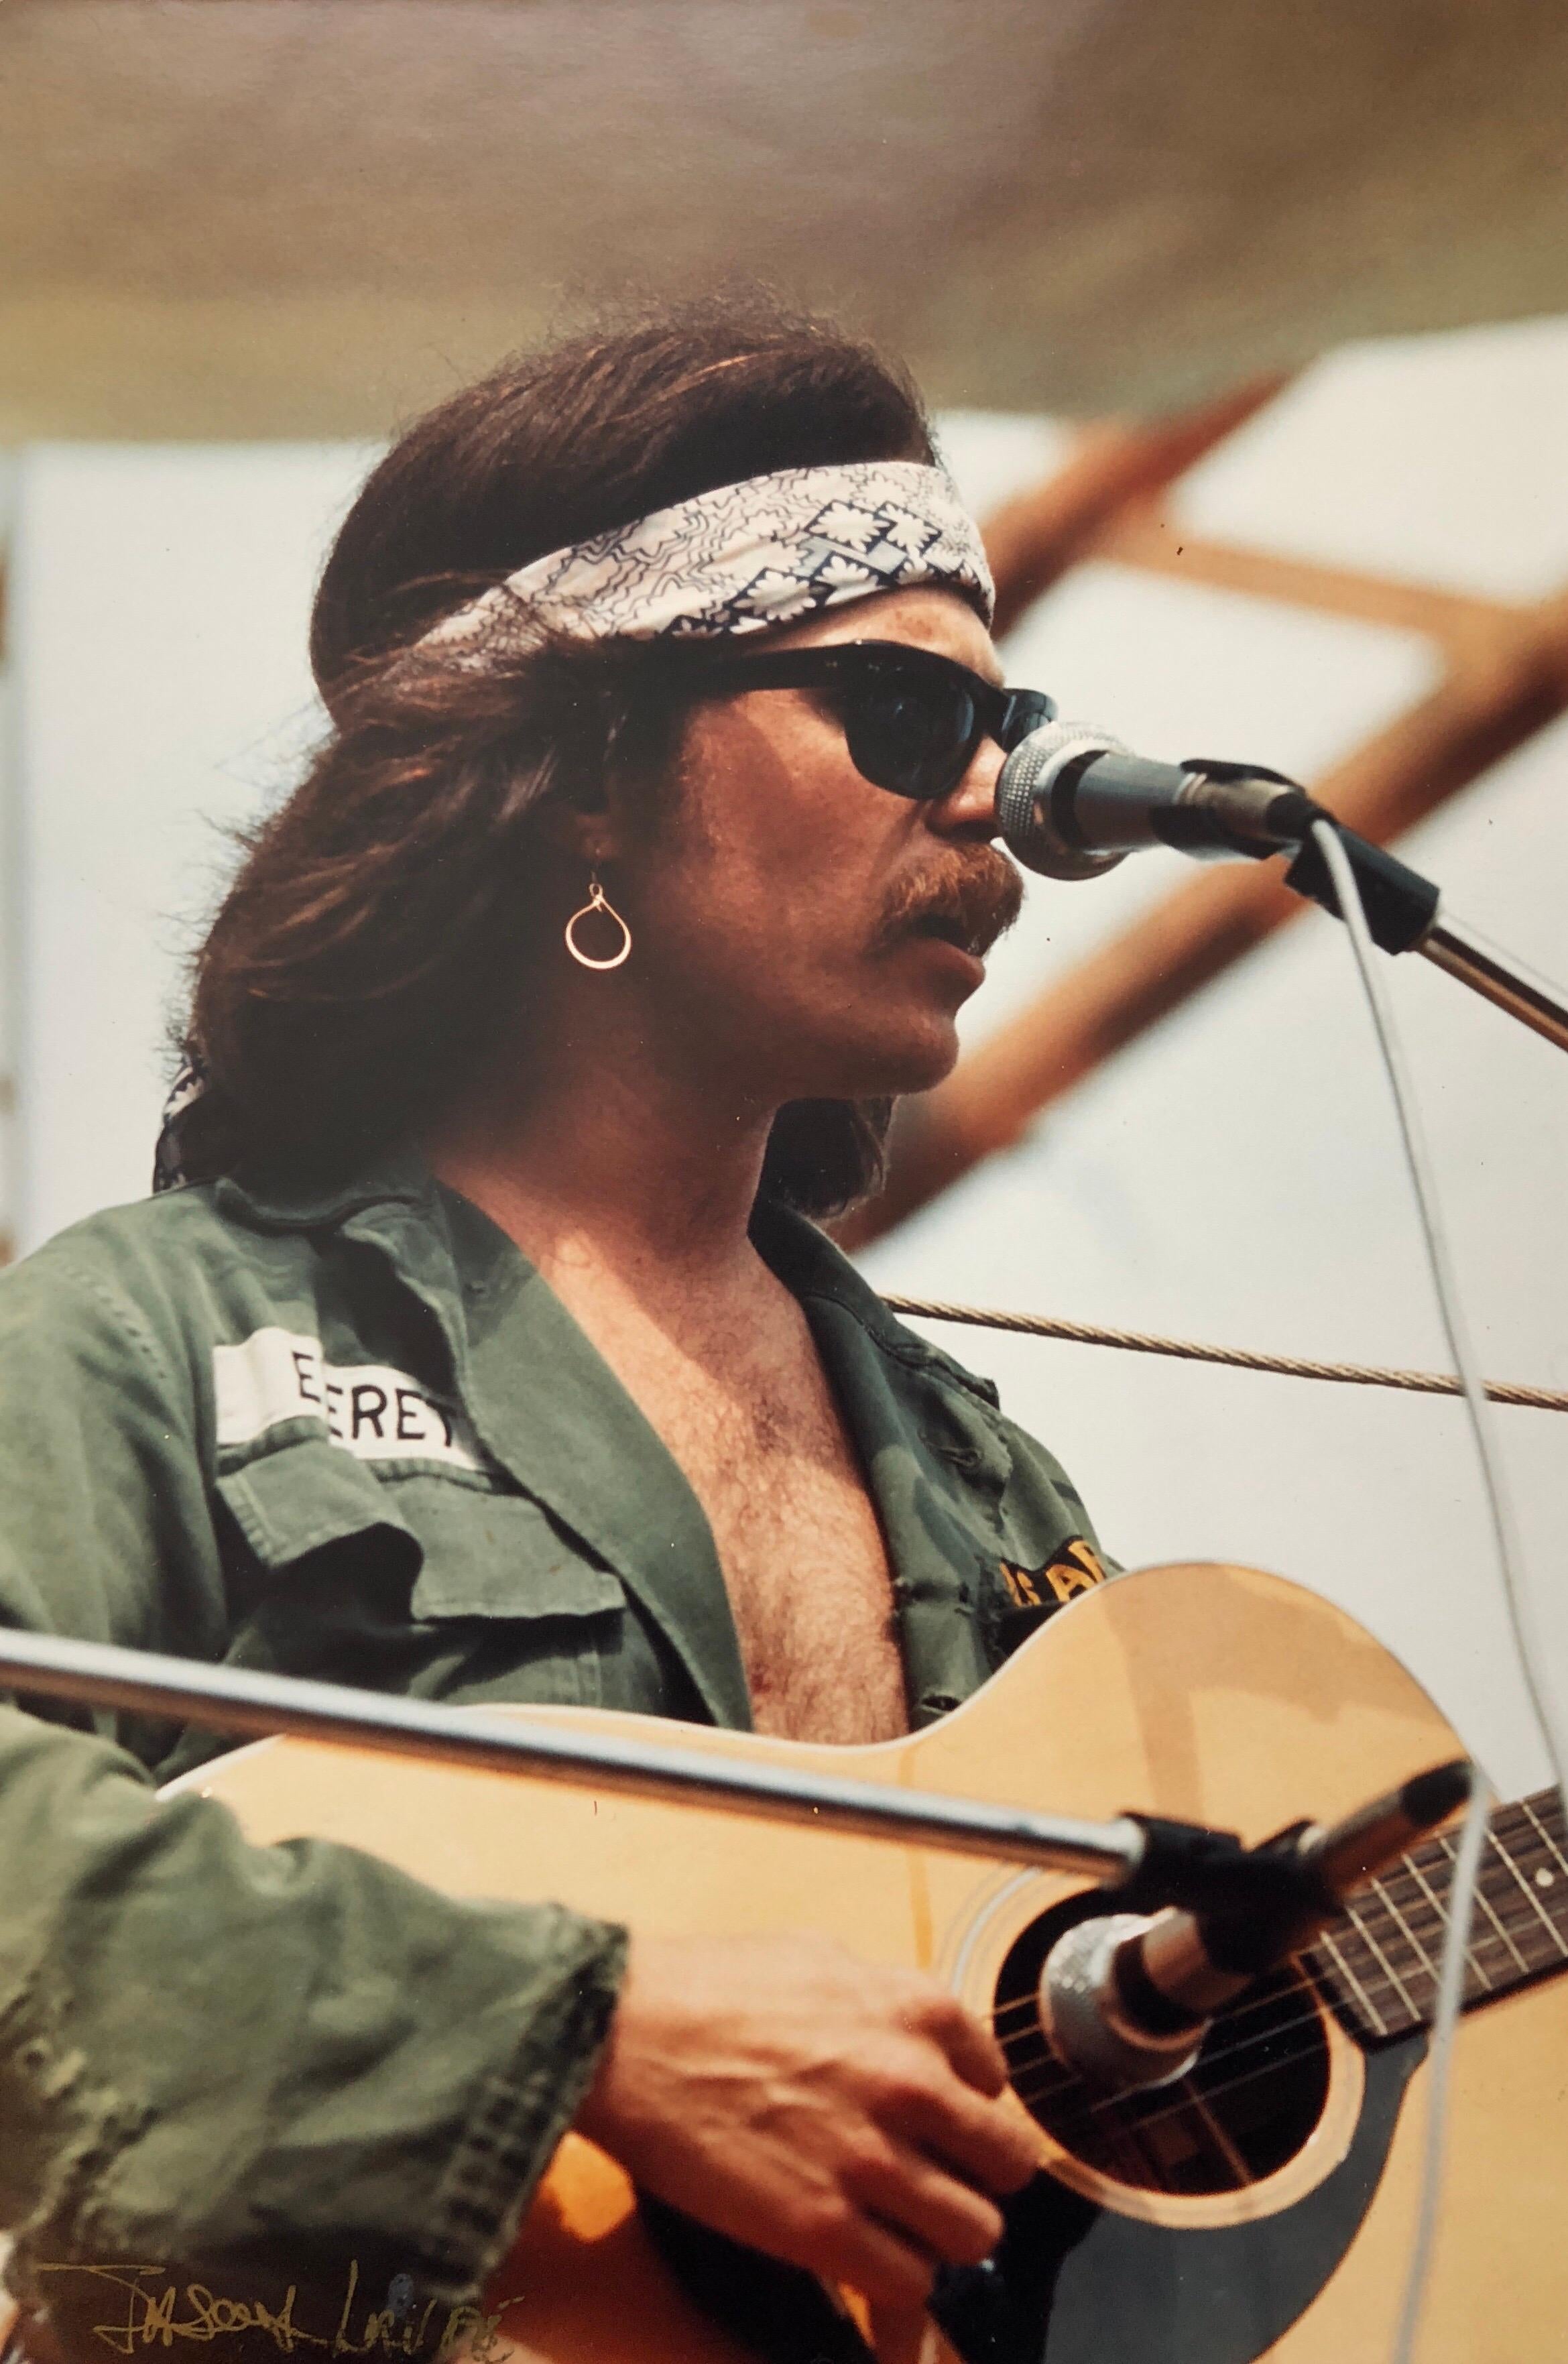 Jason Laure Figurative Photograph - Original Hand Signed Rock & Roll Photograph Woodstock Country Joe Macdonald